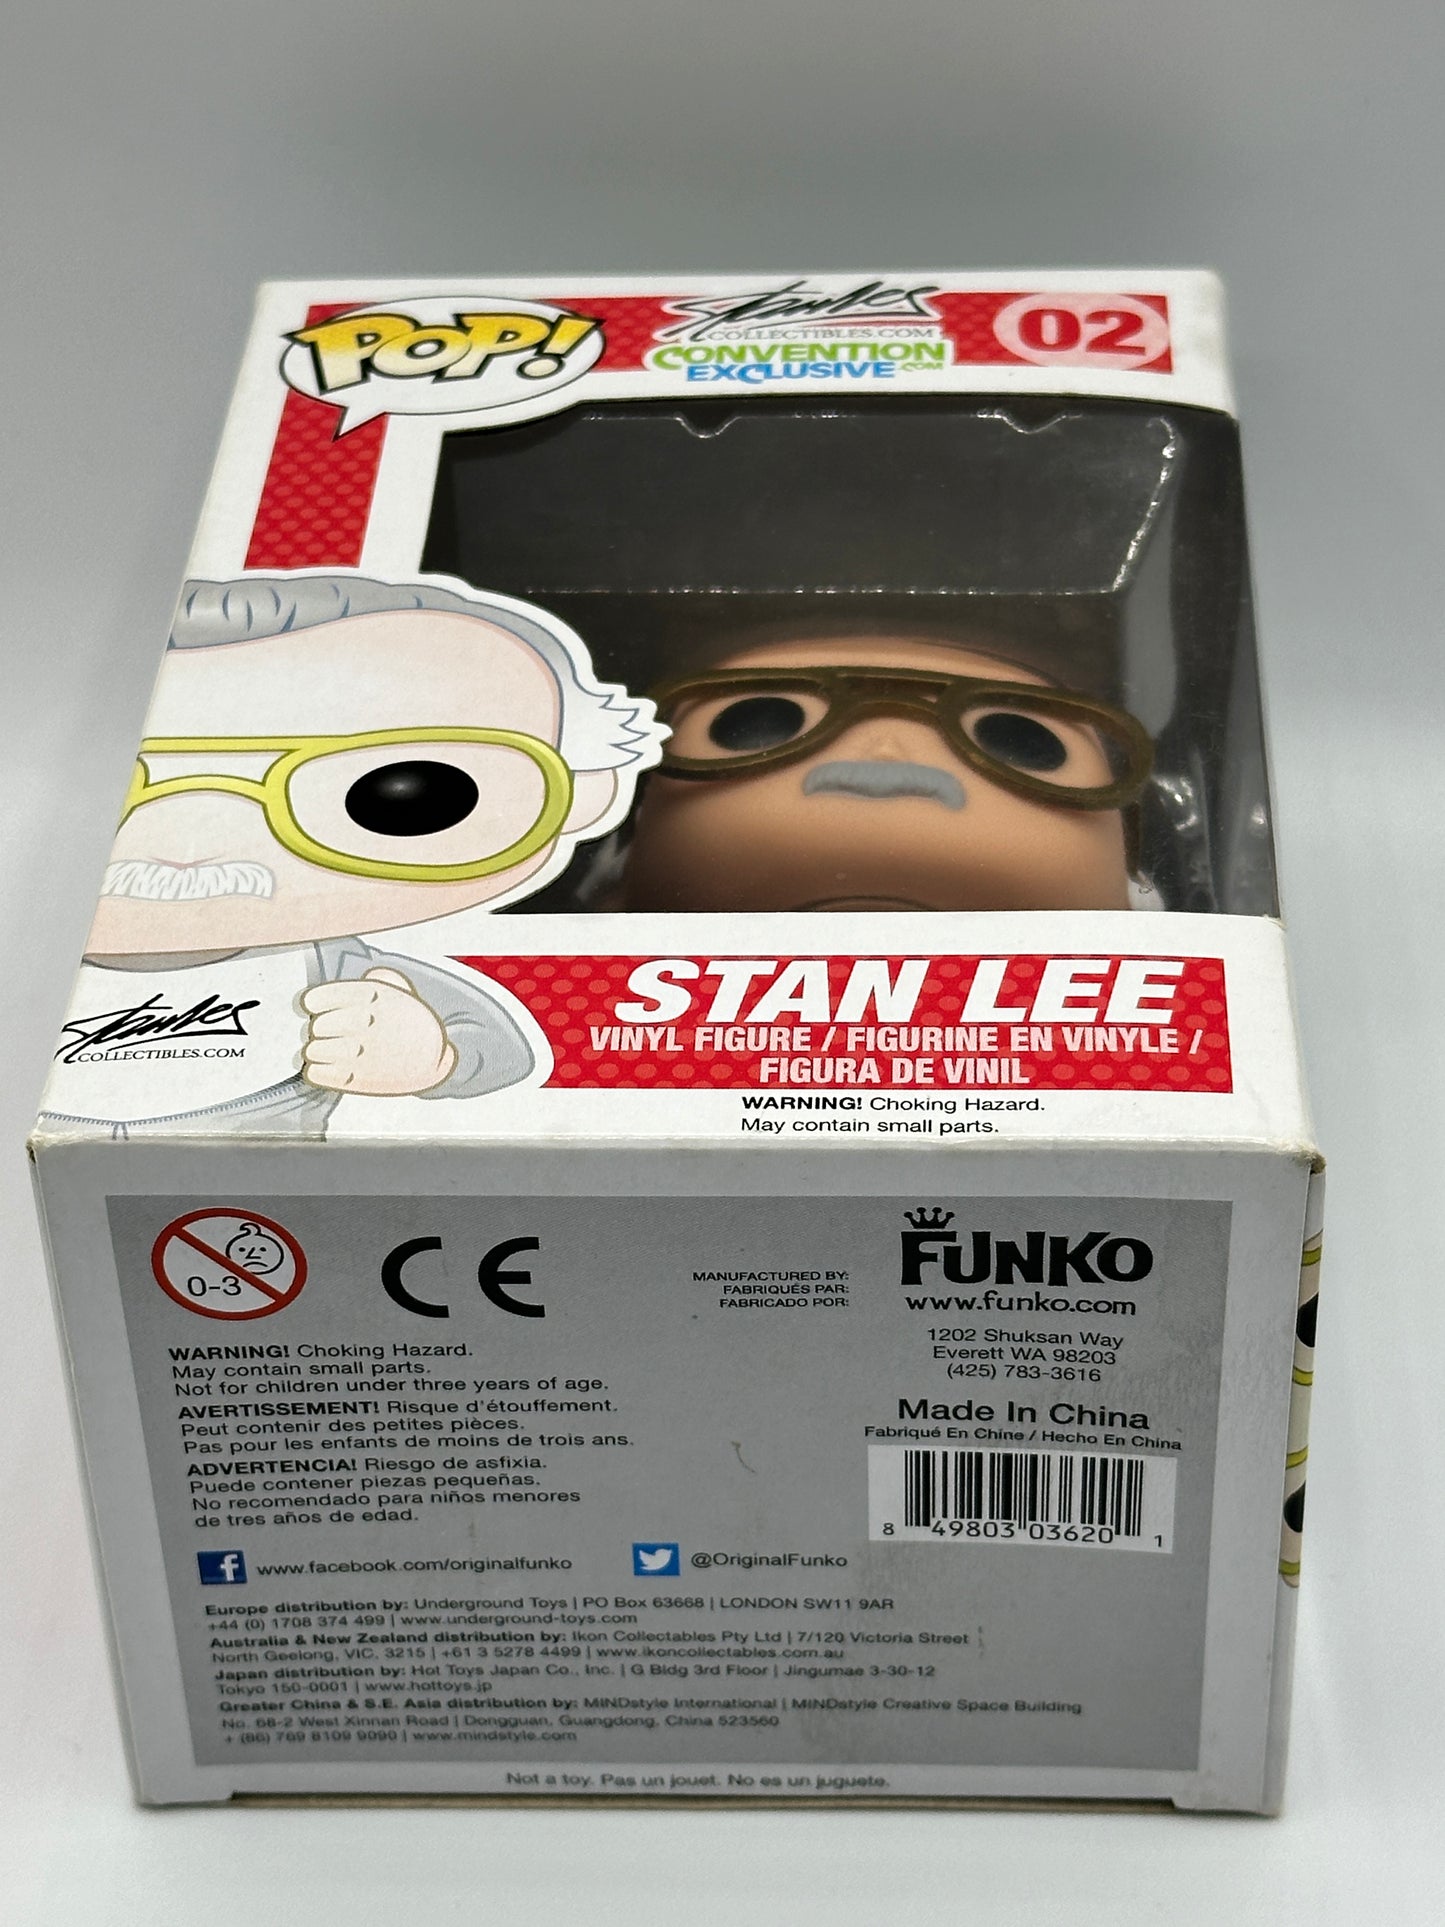 Stan Lee ( Fan Expo Canada ) (White Shoes) 02 Funko PoP! + PoP Protector